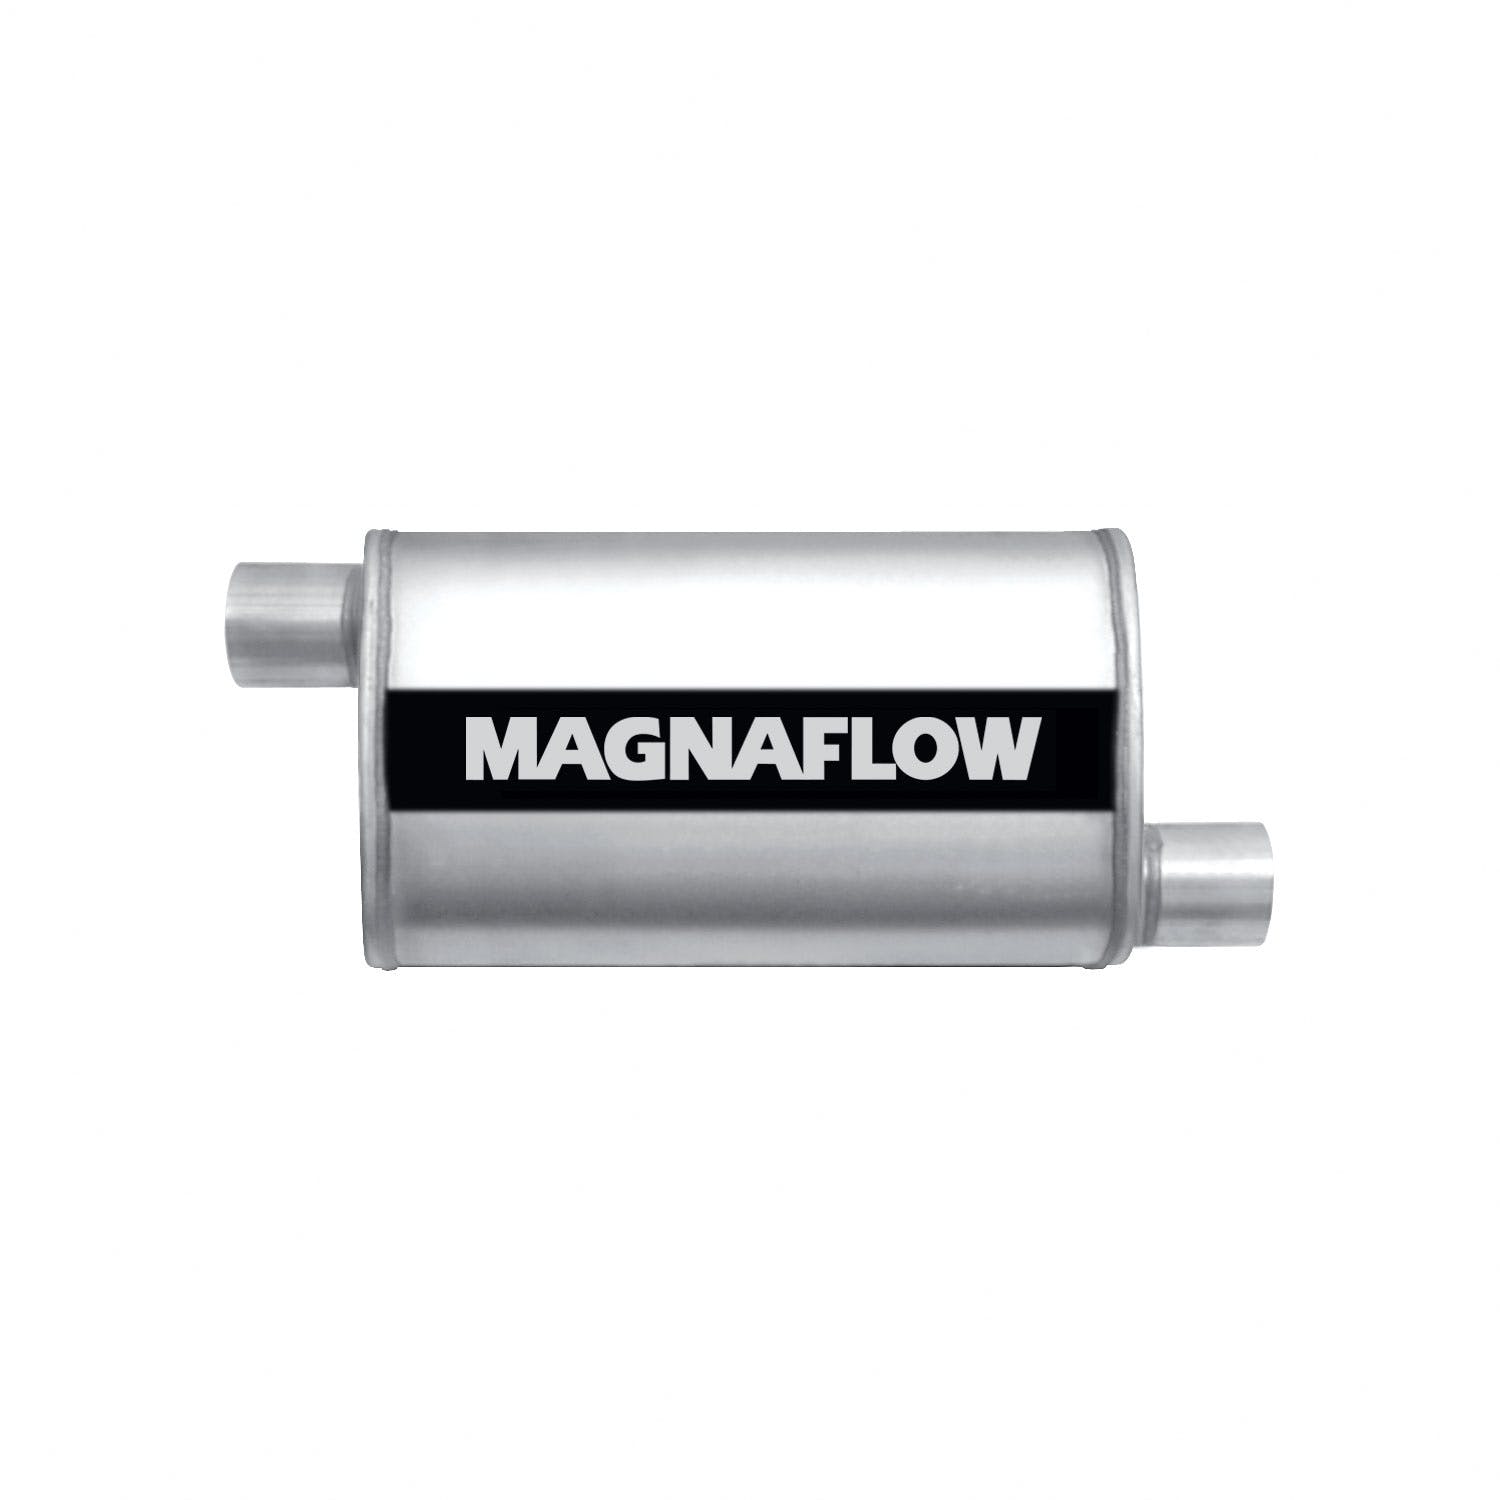 MagnaFlow Exhaust Products 11236 Universal Muffler